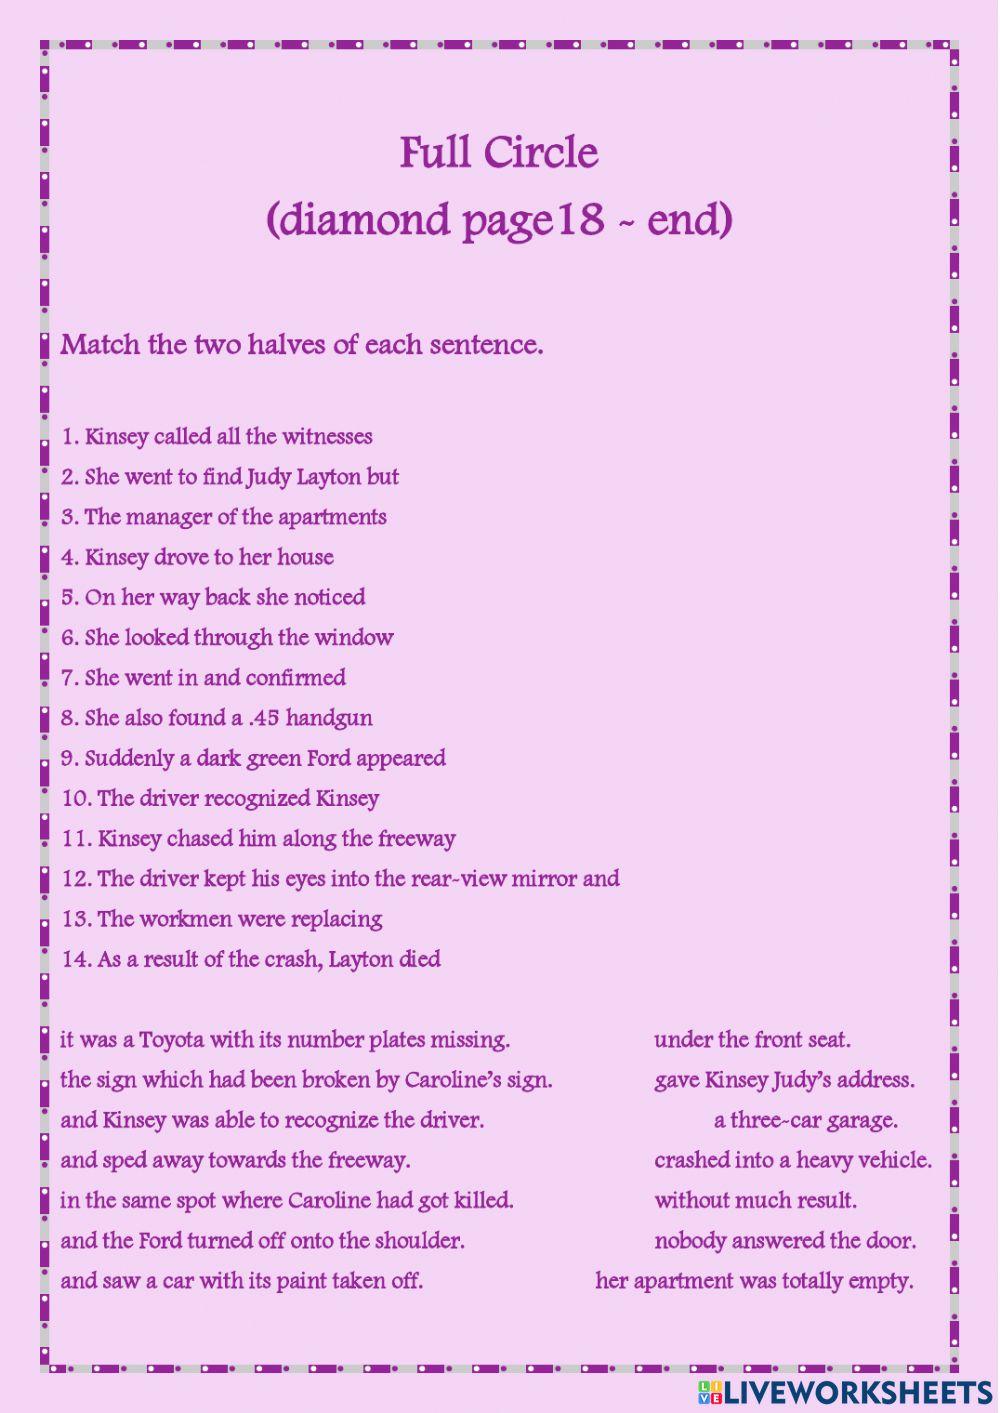 Full Circle: diamond page 18 - end